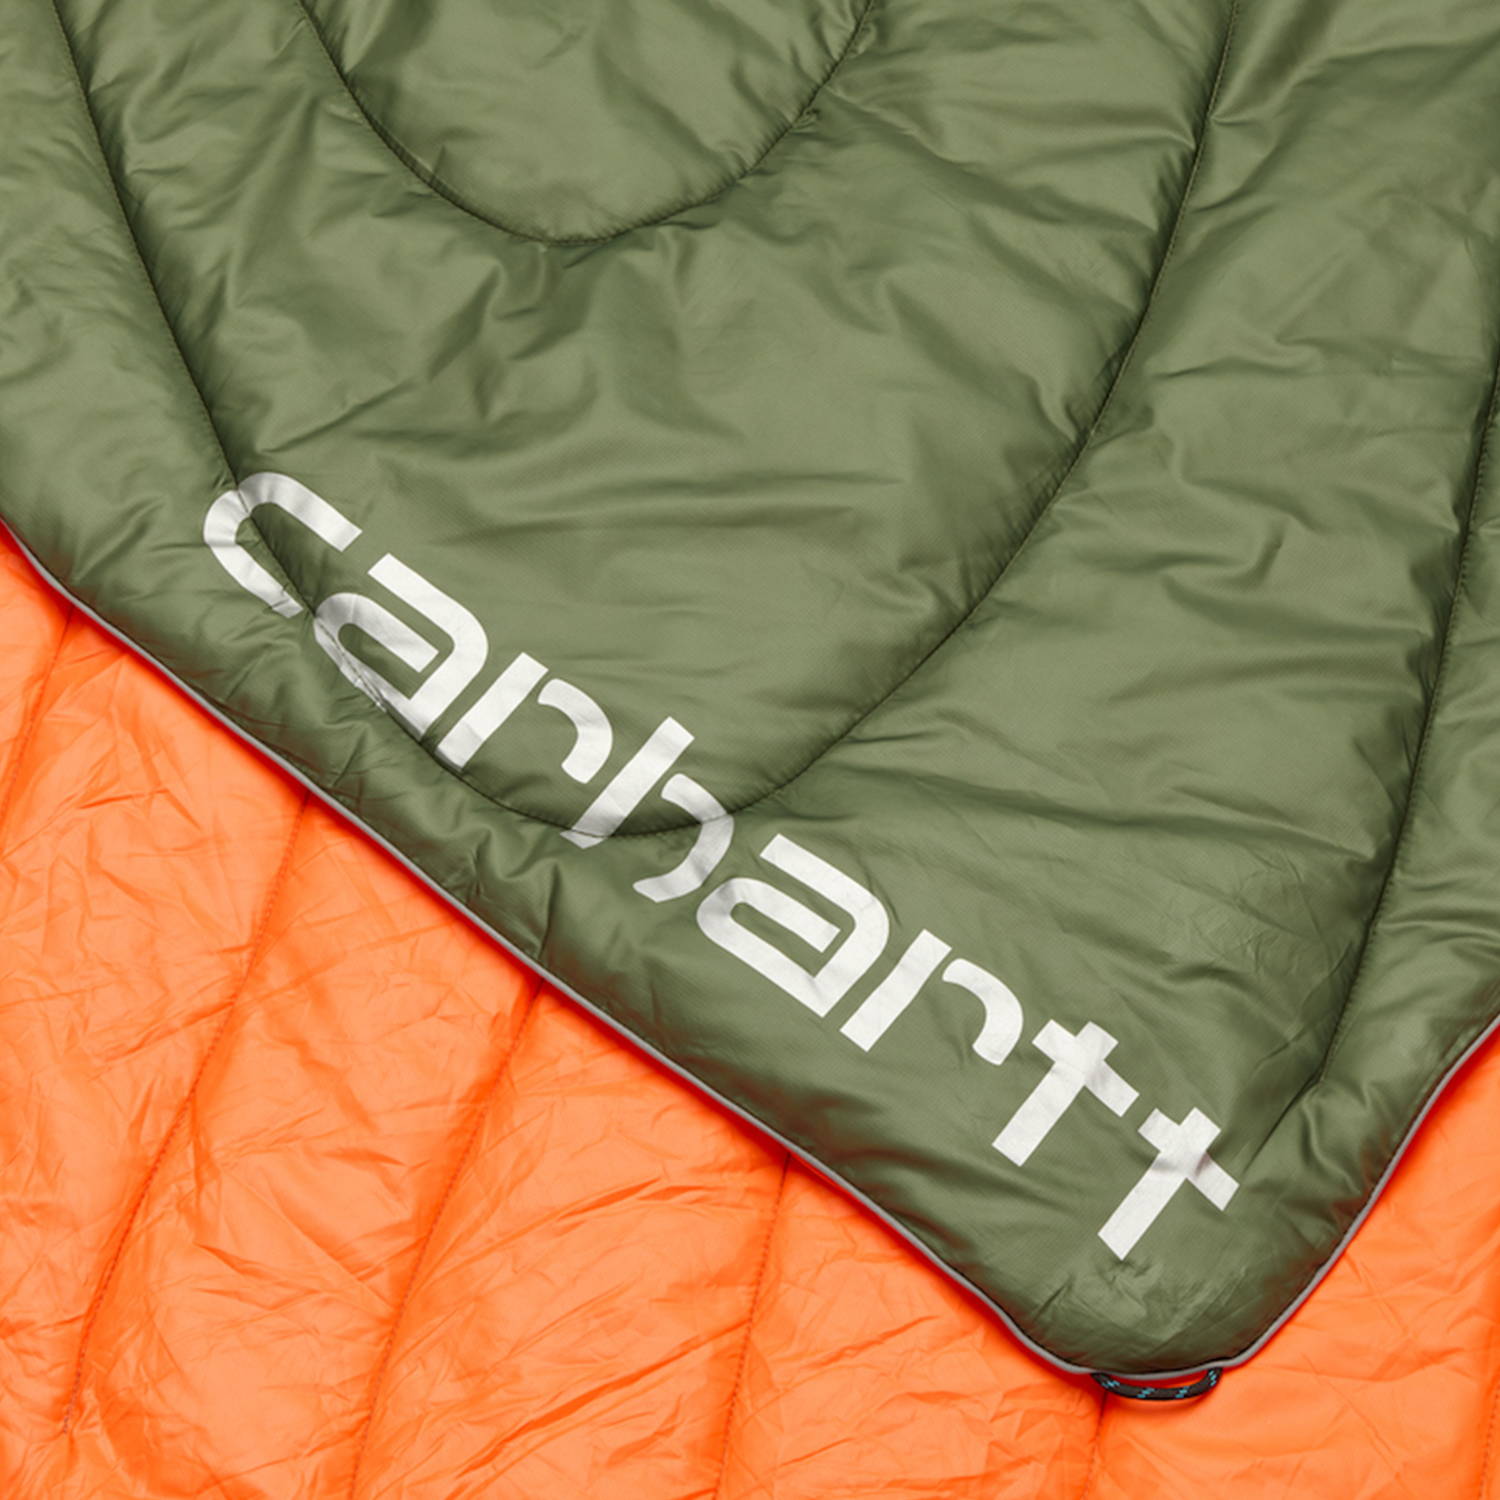 Cypress Green and Orange Carhartt Rumpl Blanket